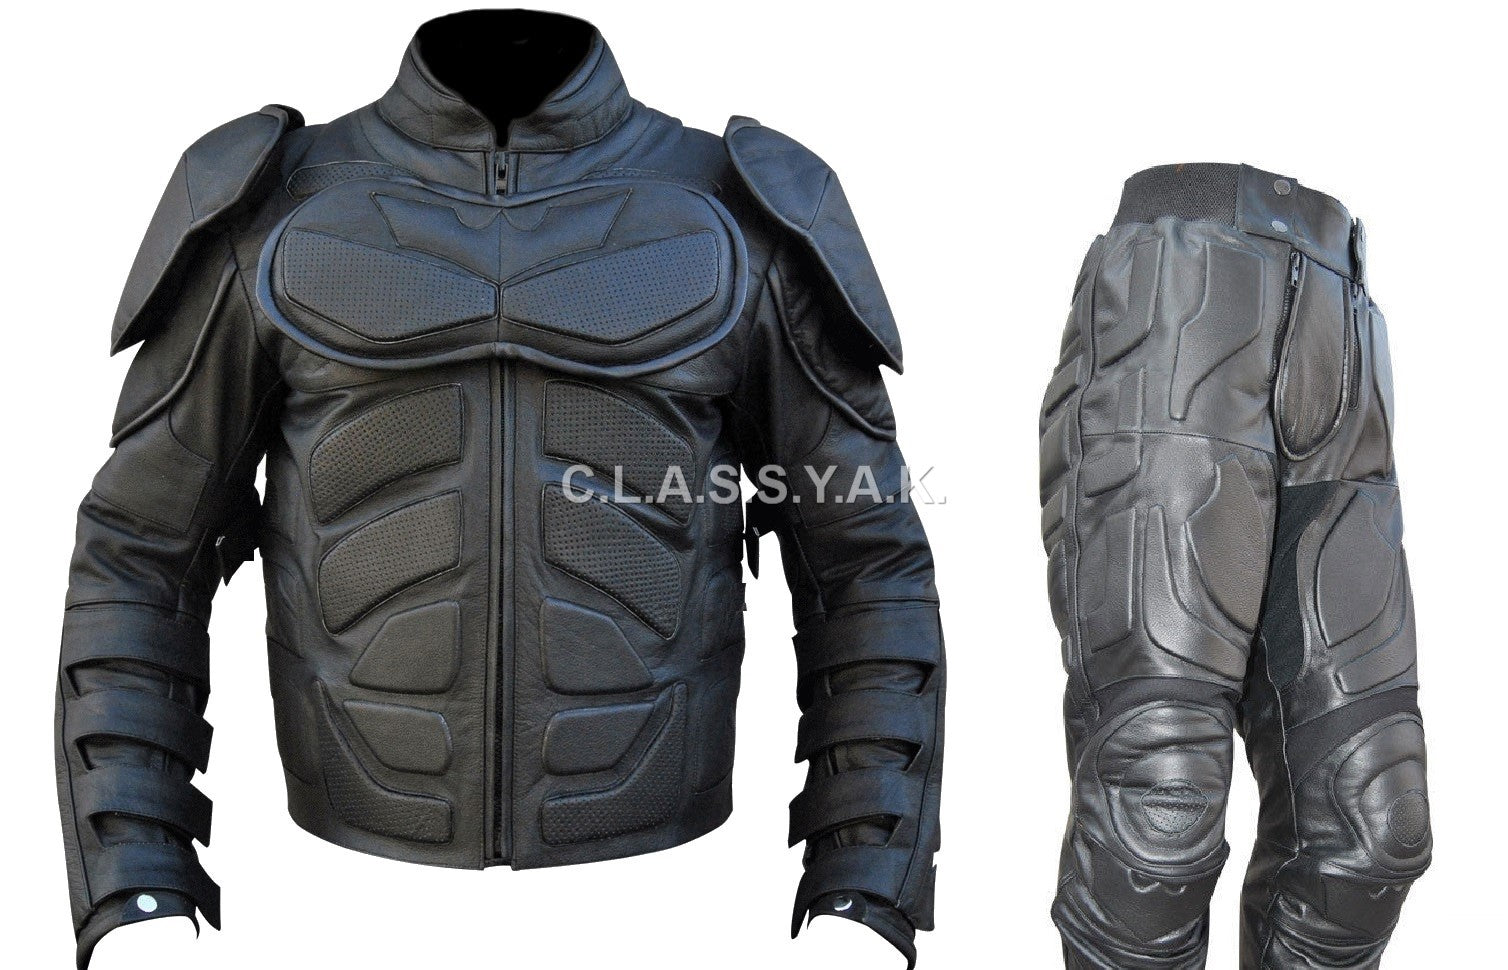 Classyak Men's Dark Knight Real Leather Suit